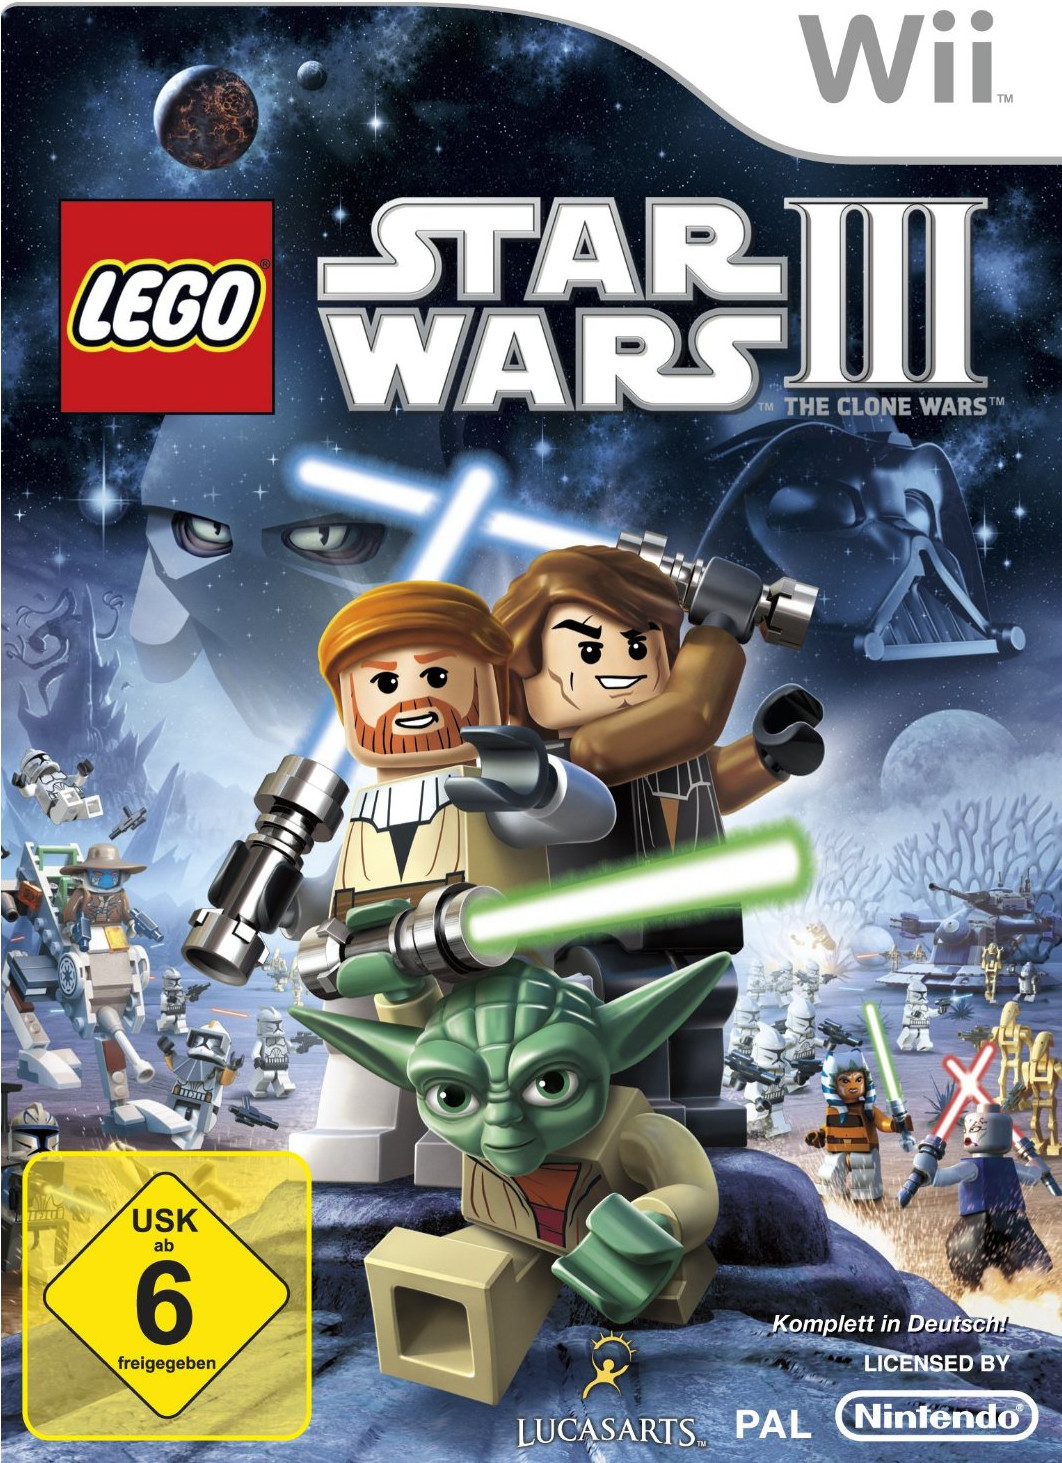 download free lego star wars wii u